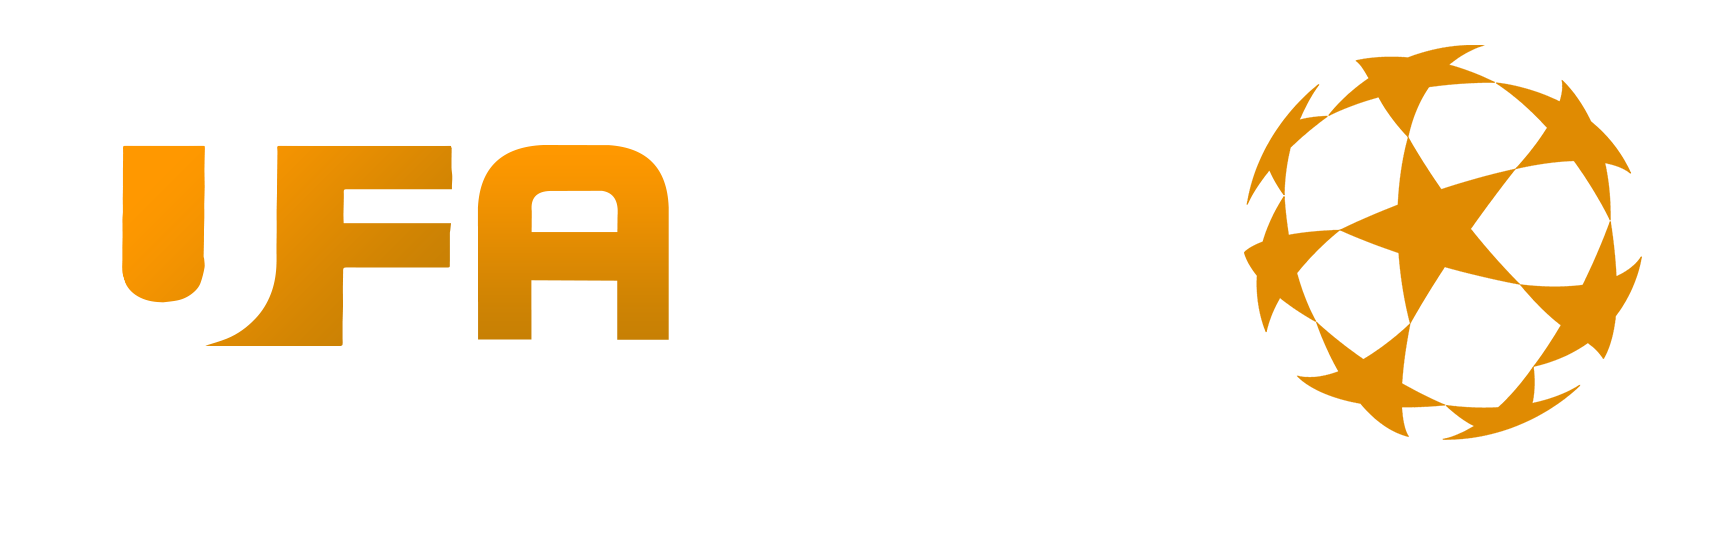 UFA168GOD logo text